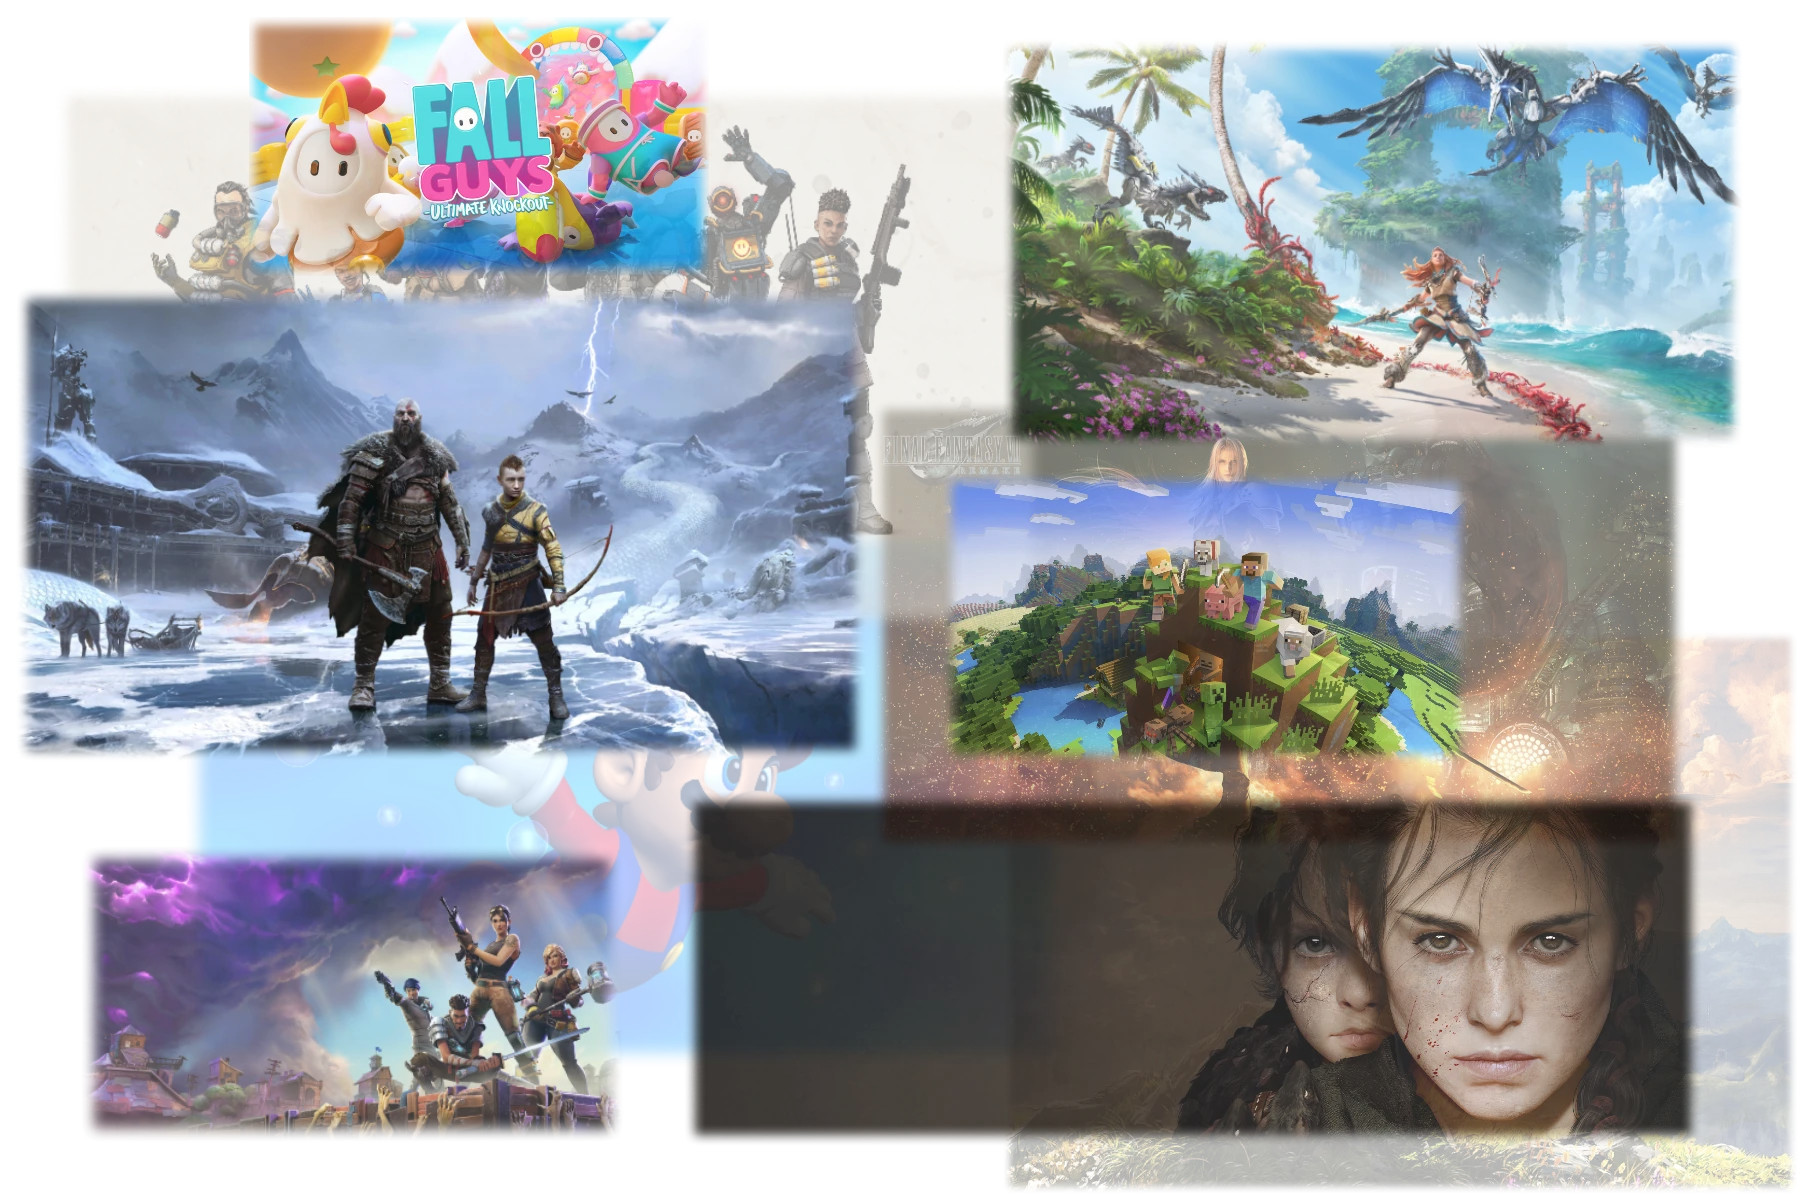 Multiple video games artworks